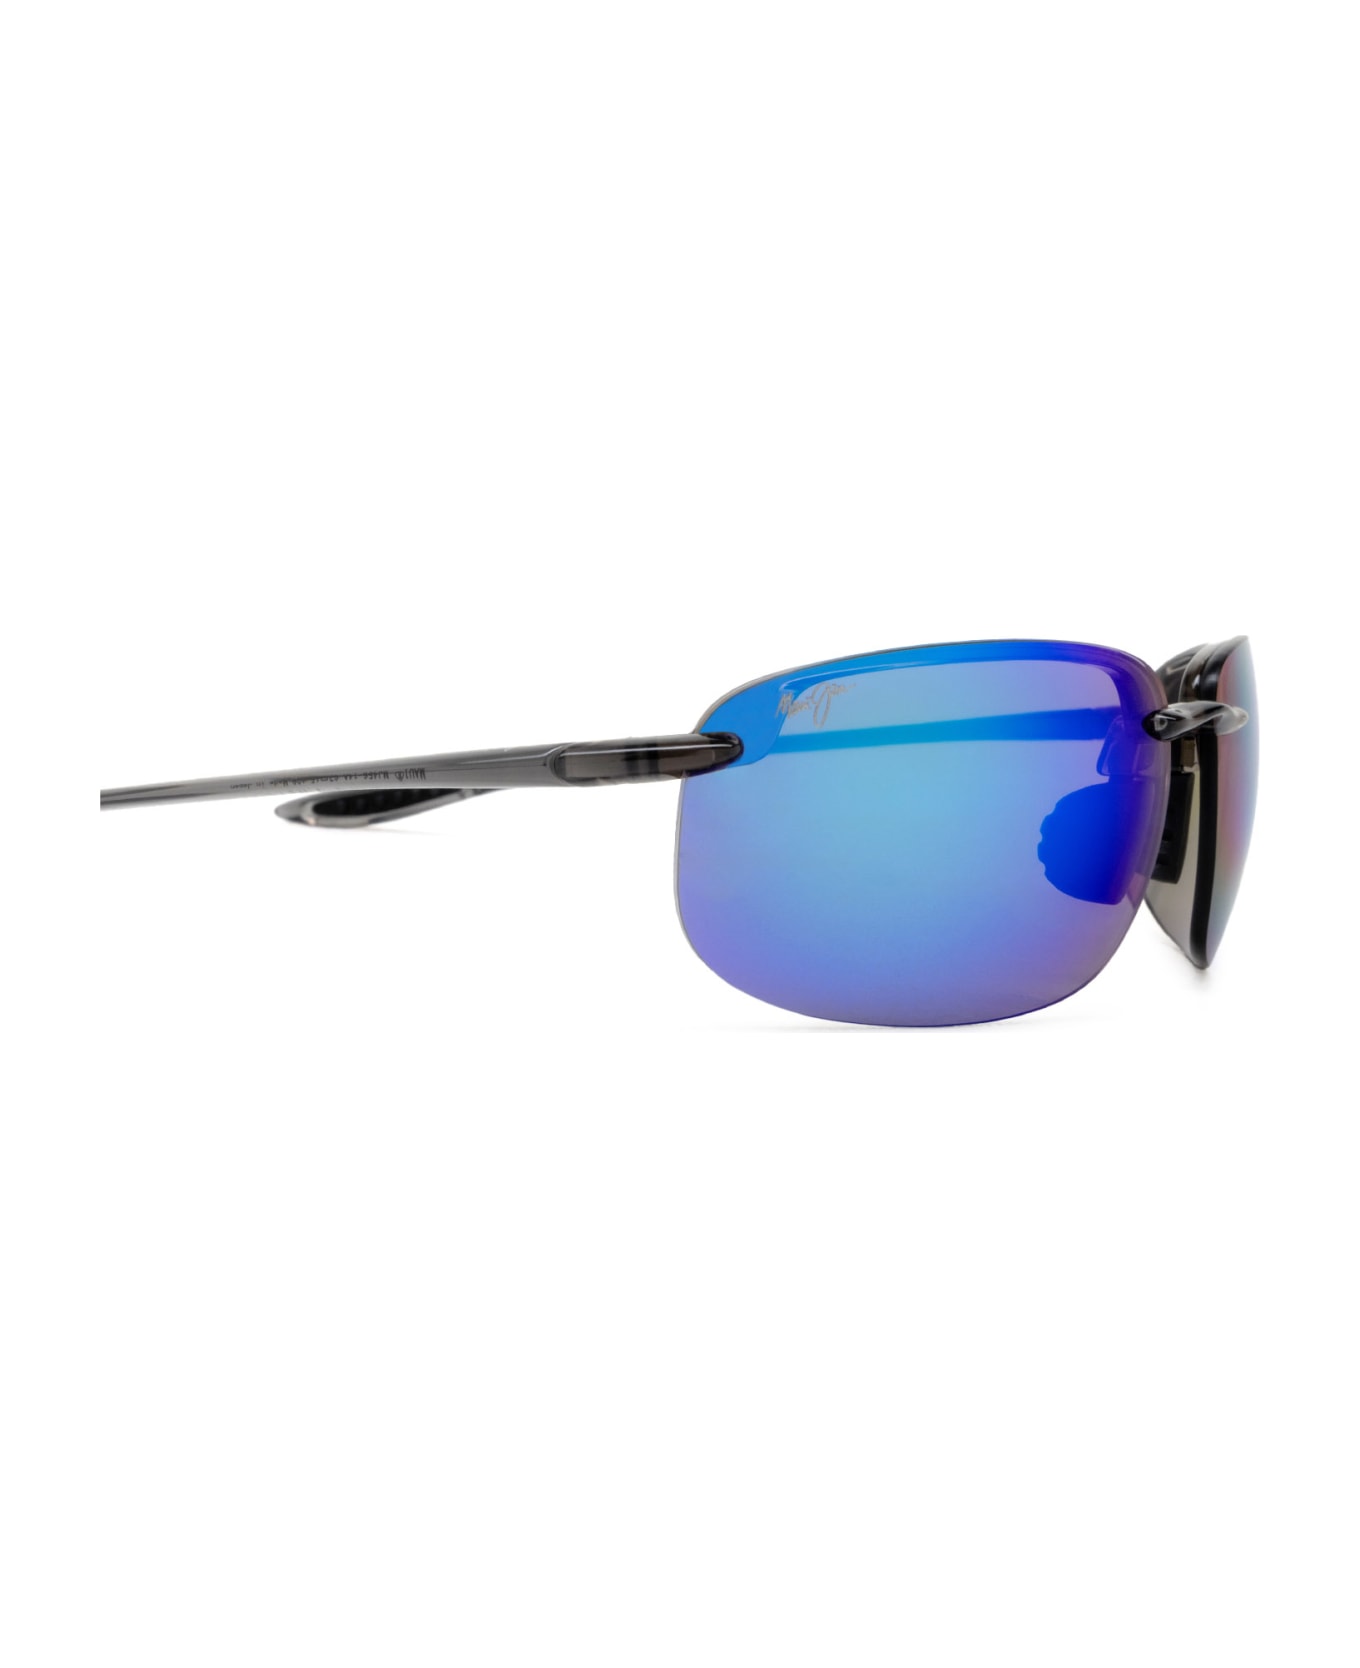 Maui Jim Mj456 Translucent Grey Sunglasses - Translucent Grey